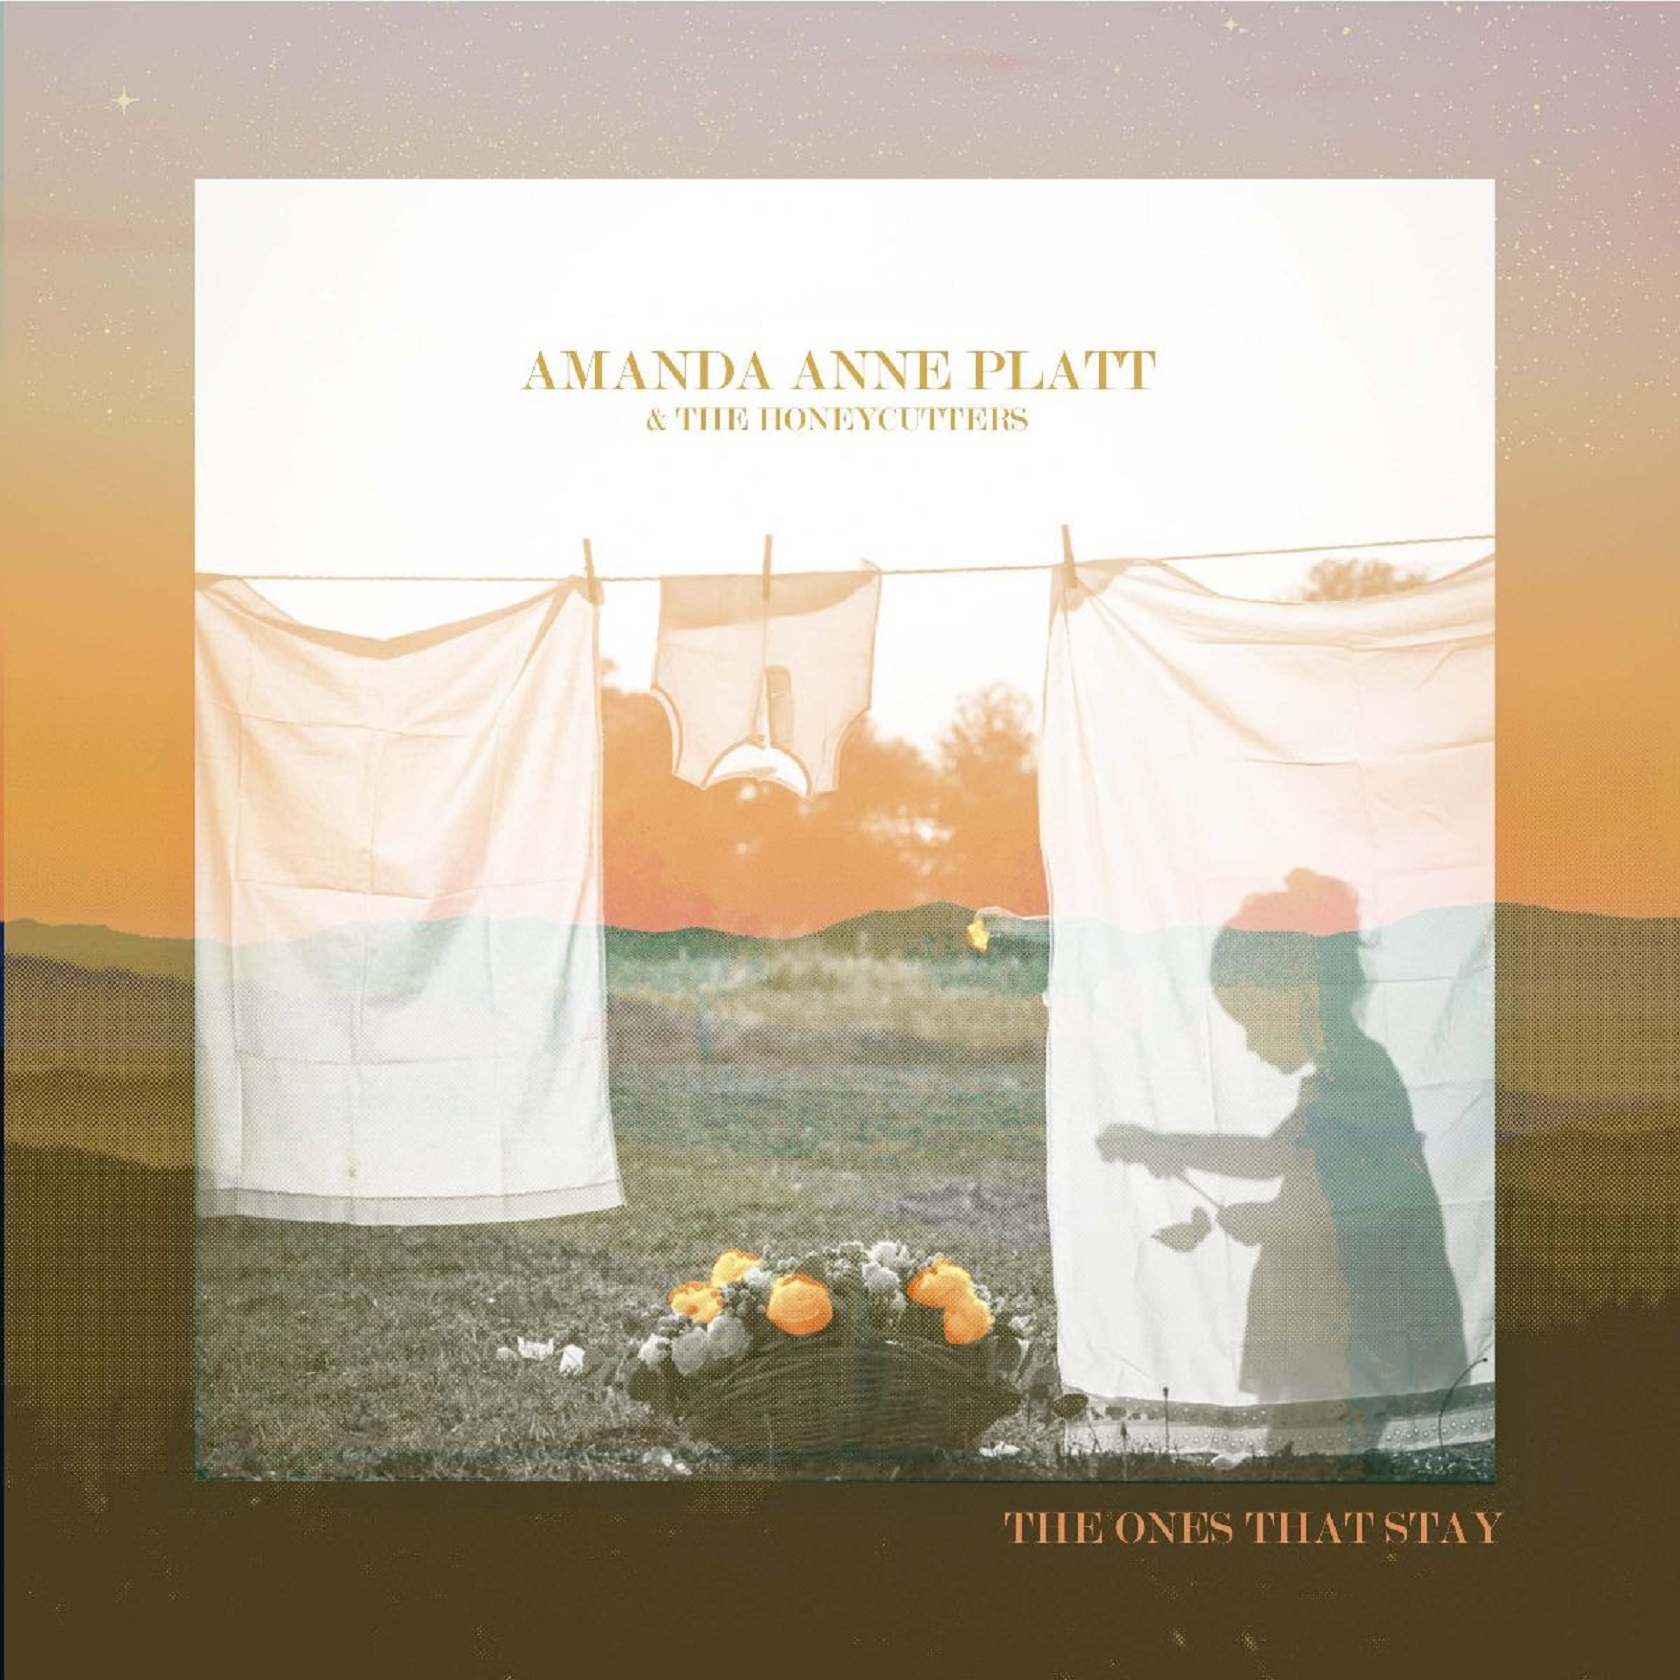 AMANDA ANNE PLATT & THE HONEYCUTTERS TO DROP NEW ALBUM AUGUST 9TH